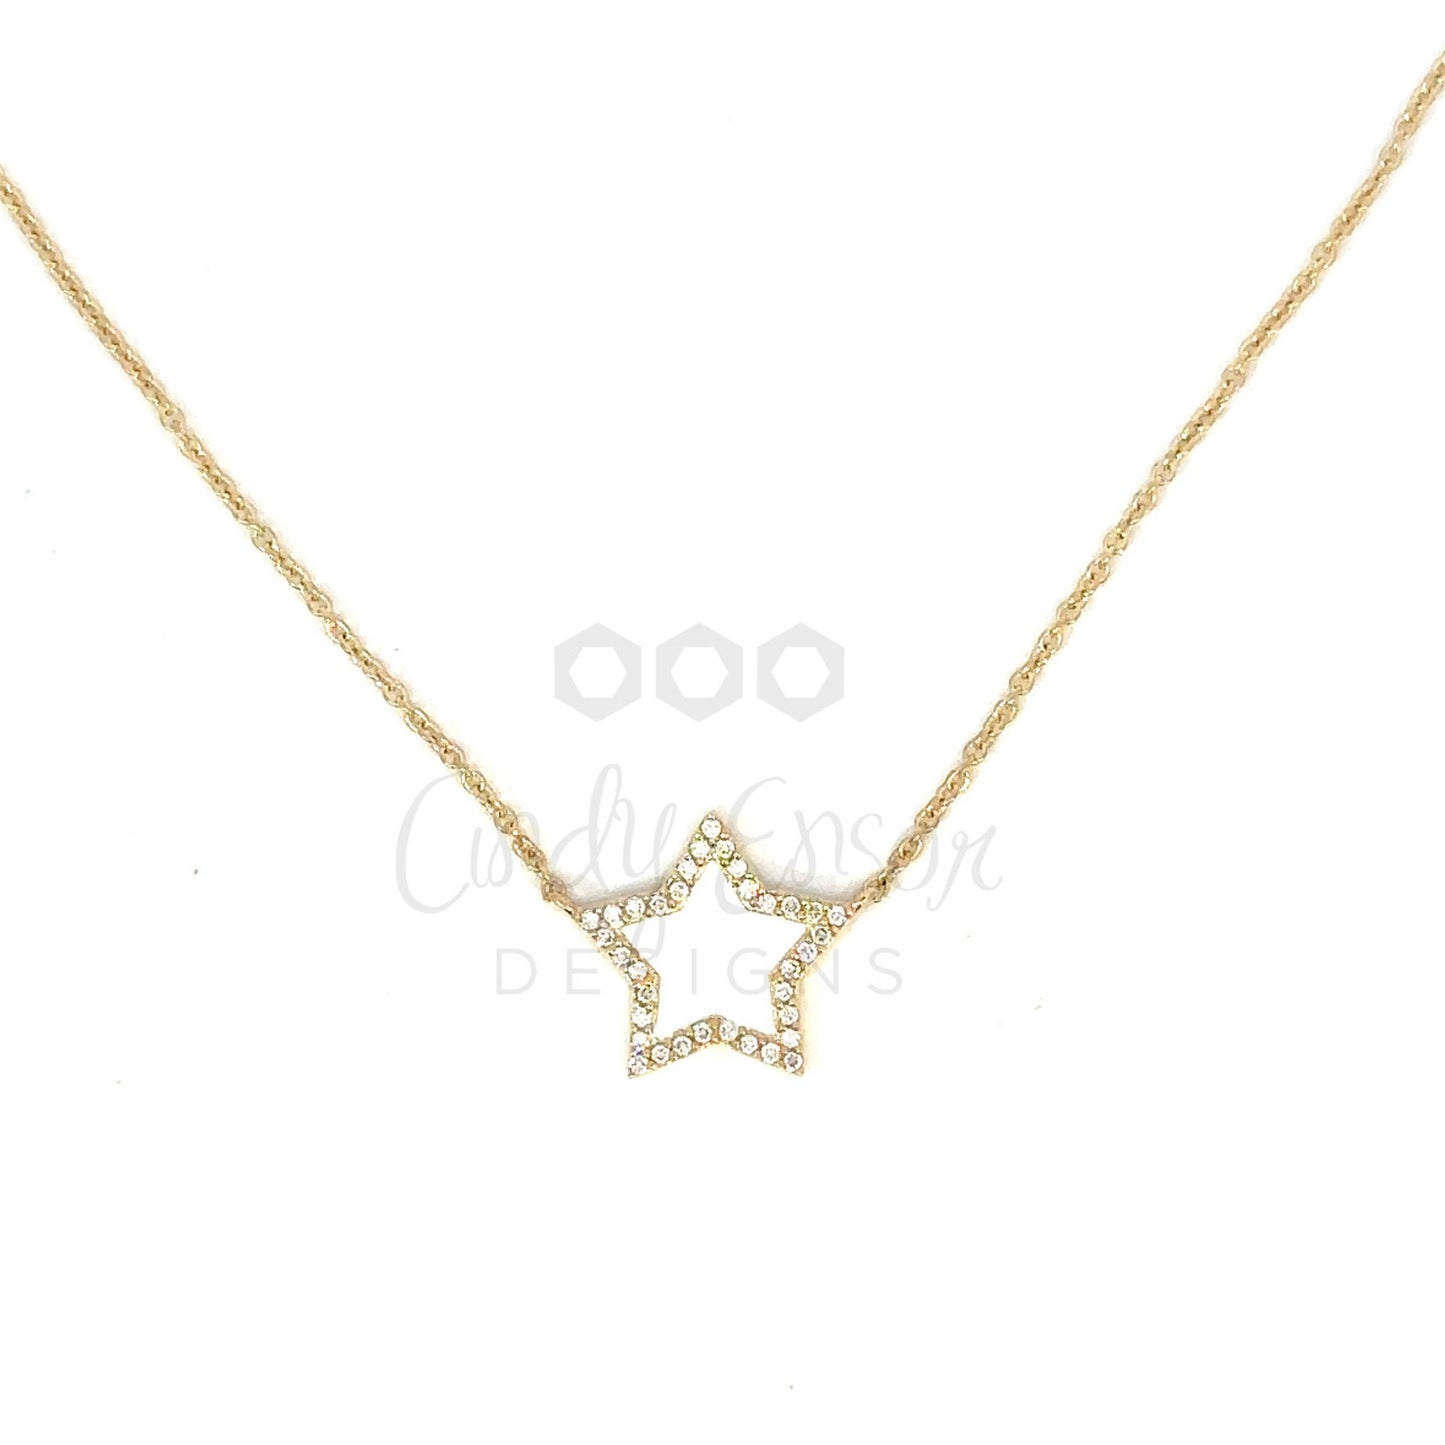 Enamel Star Necklace with Pave Diamond Border